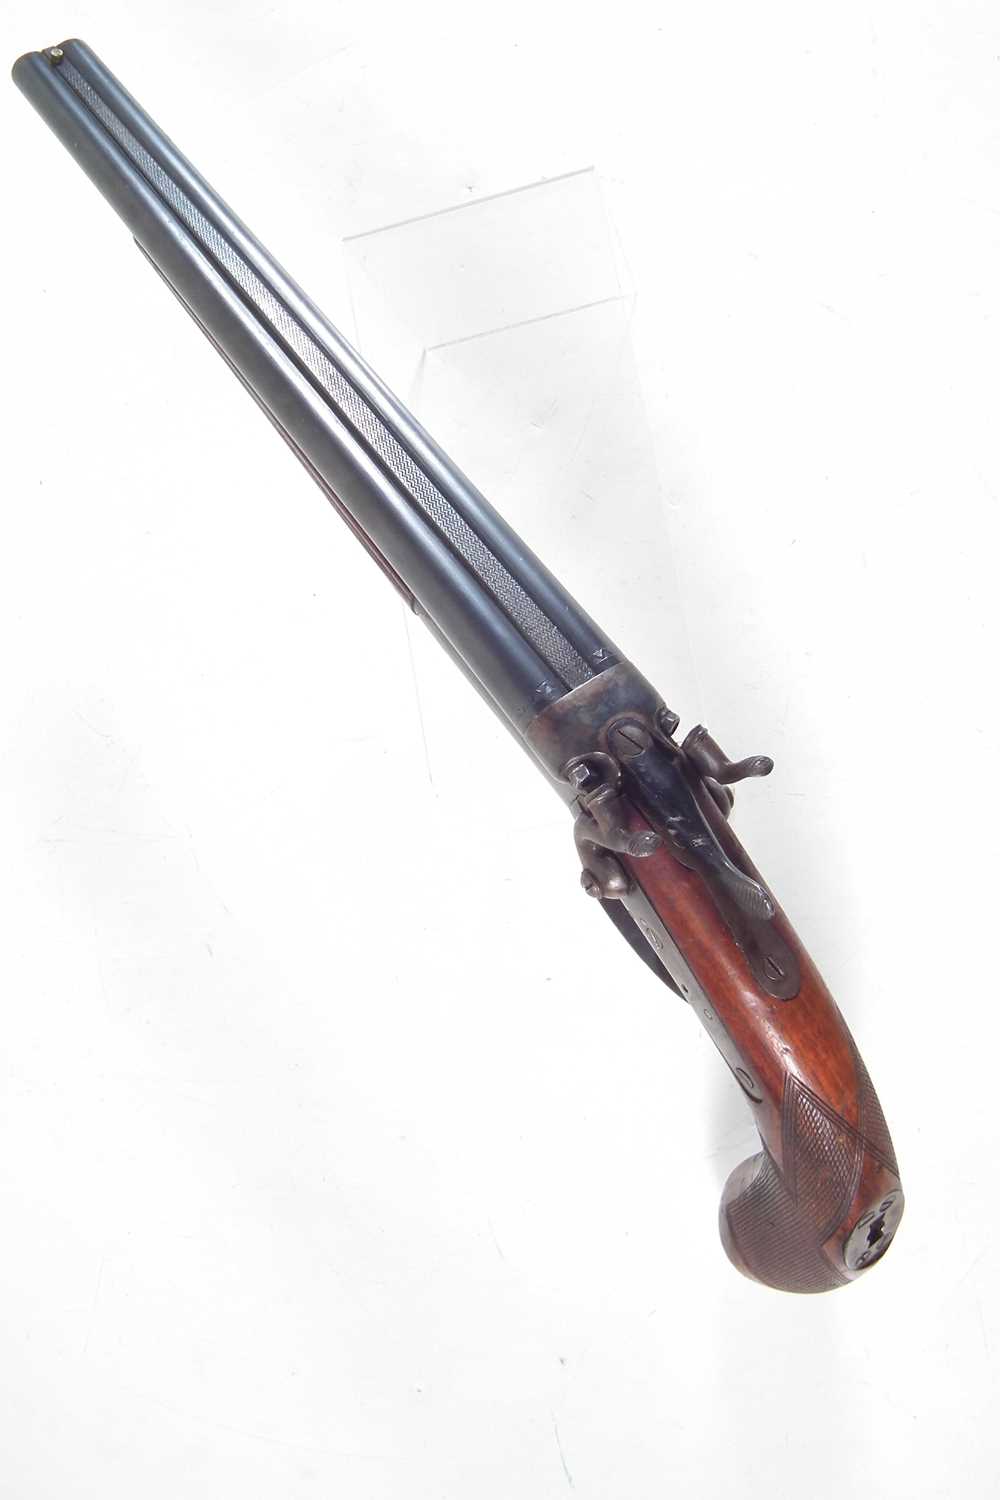 Deactivated double barrel sawn-off shotgun - Image 5 of 7